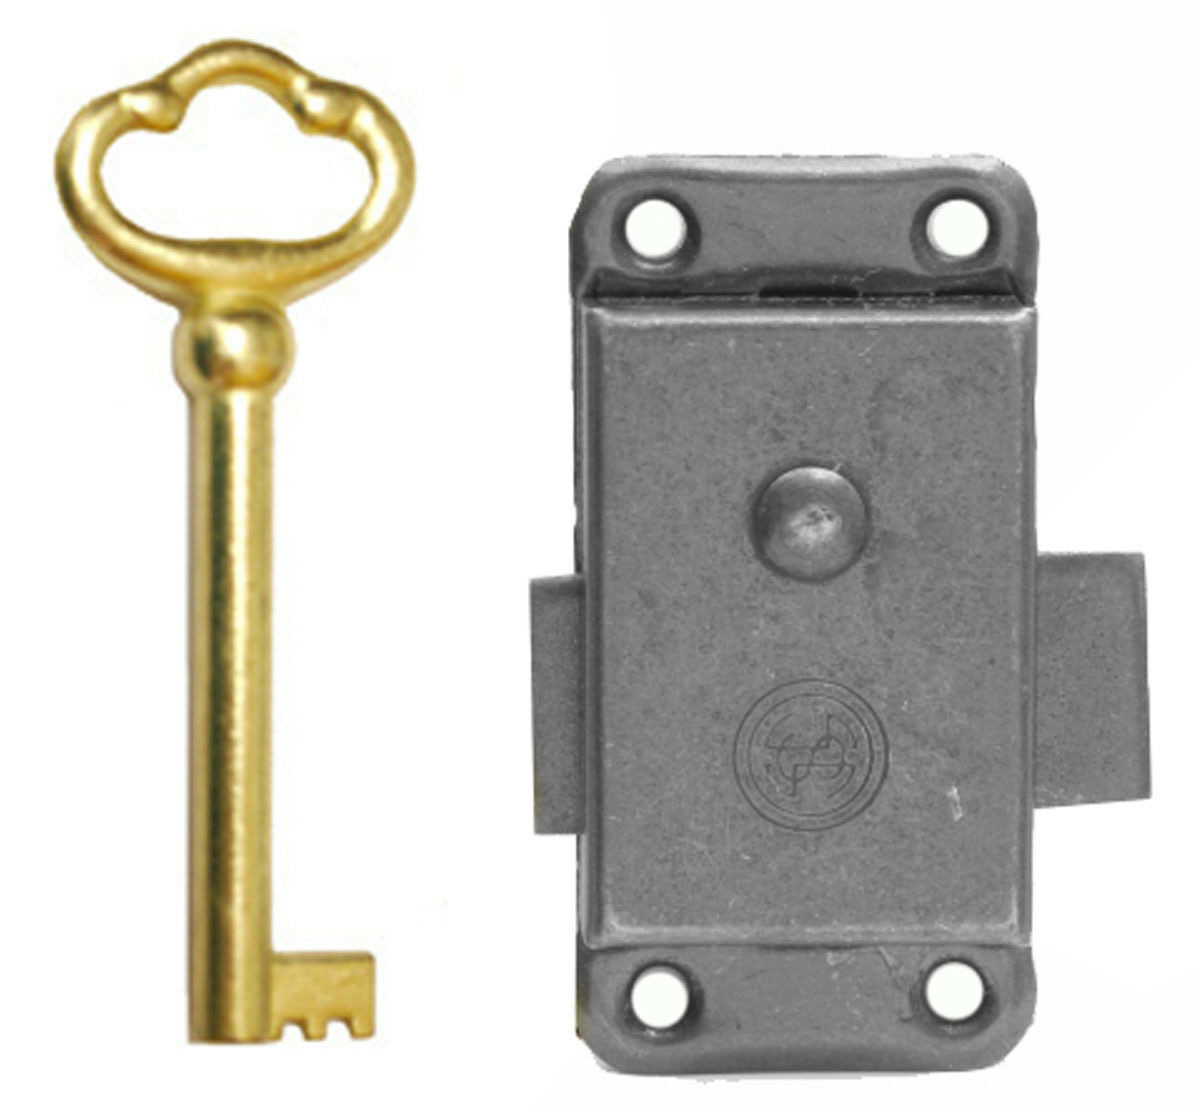 2pc. Gold Lock and Key Set